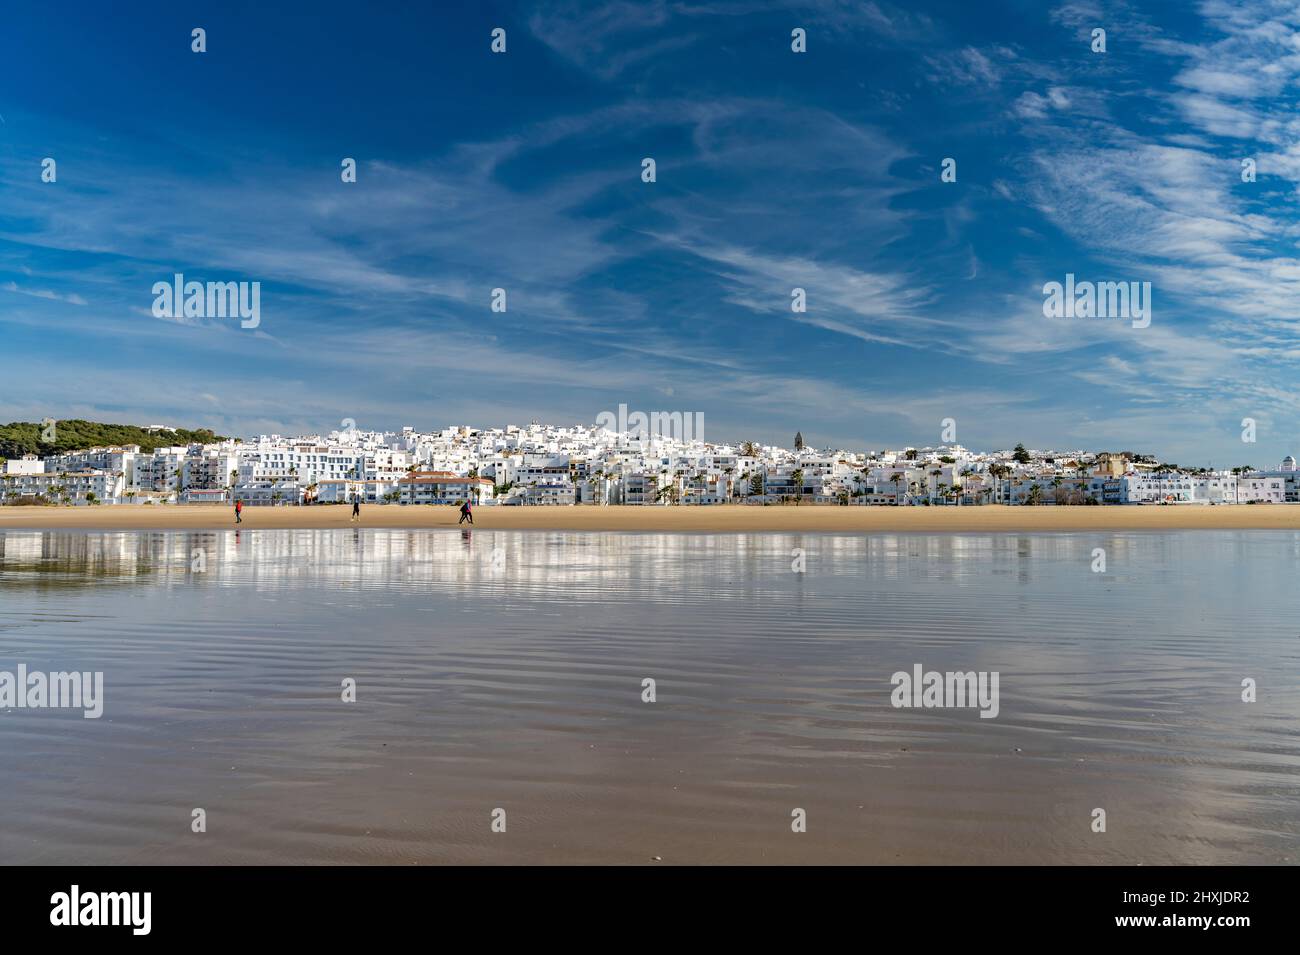 Die Stadtansicht von Conil spiegelt sich am Strand Playa De Los Bateles, Conil de la Frontera, Costa de la Luz, Andalusien, Spanien | Conil cityscap Stockfoto